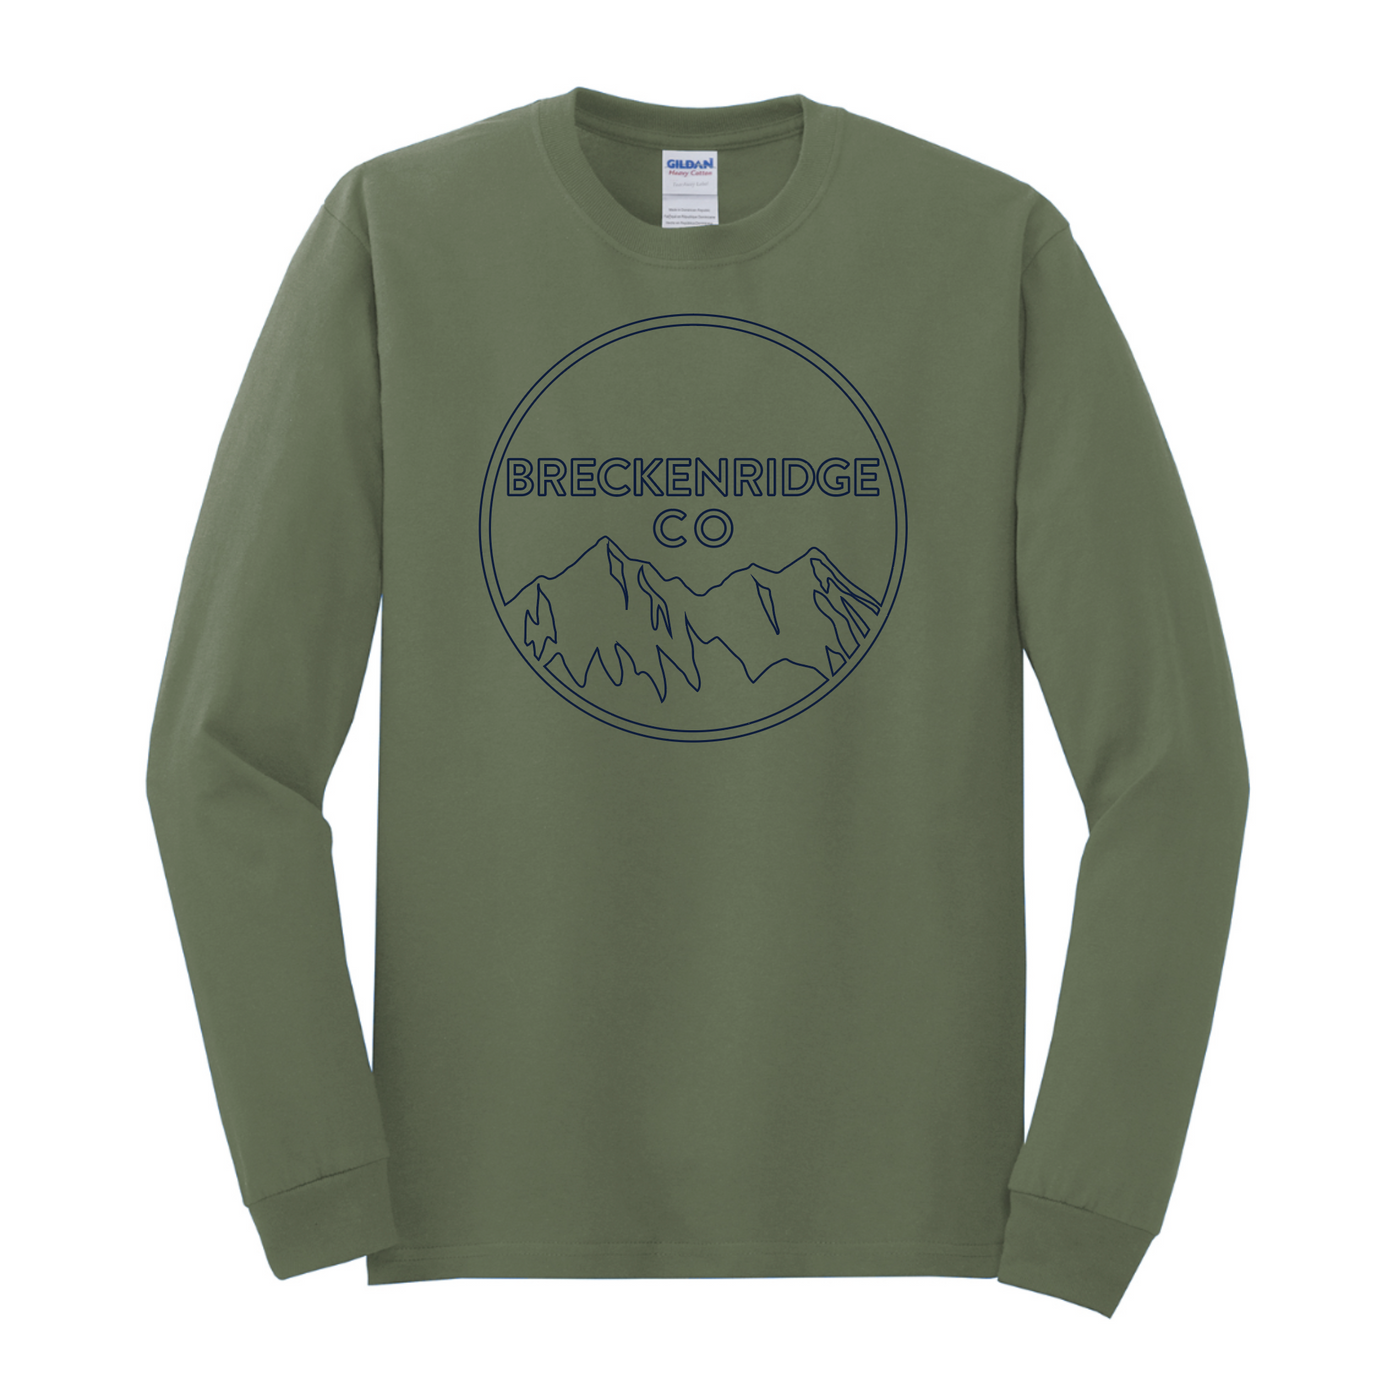 The Breckenridge 1876 Long Sleeve Shirt